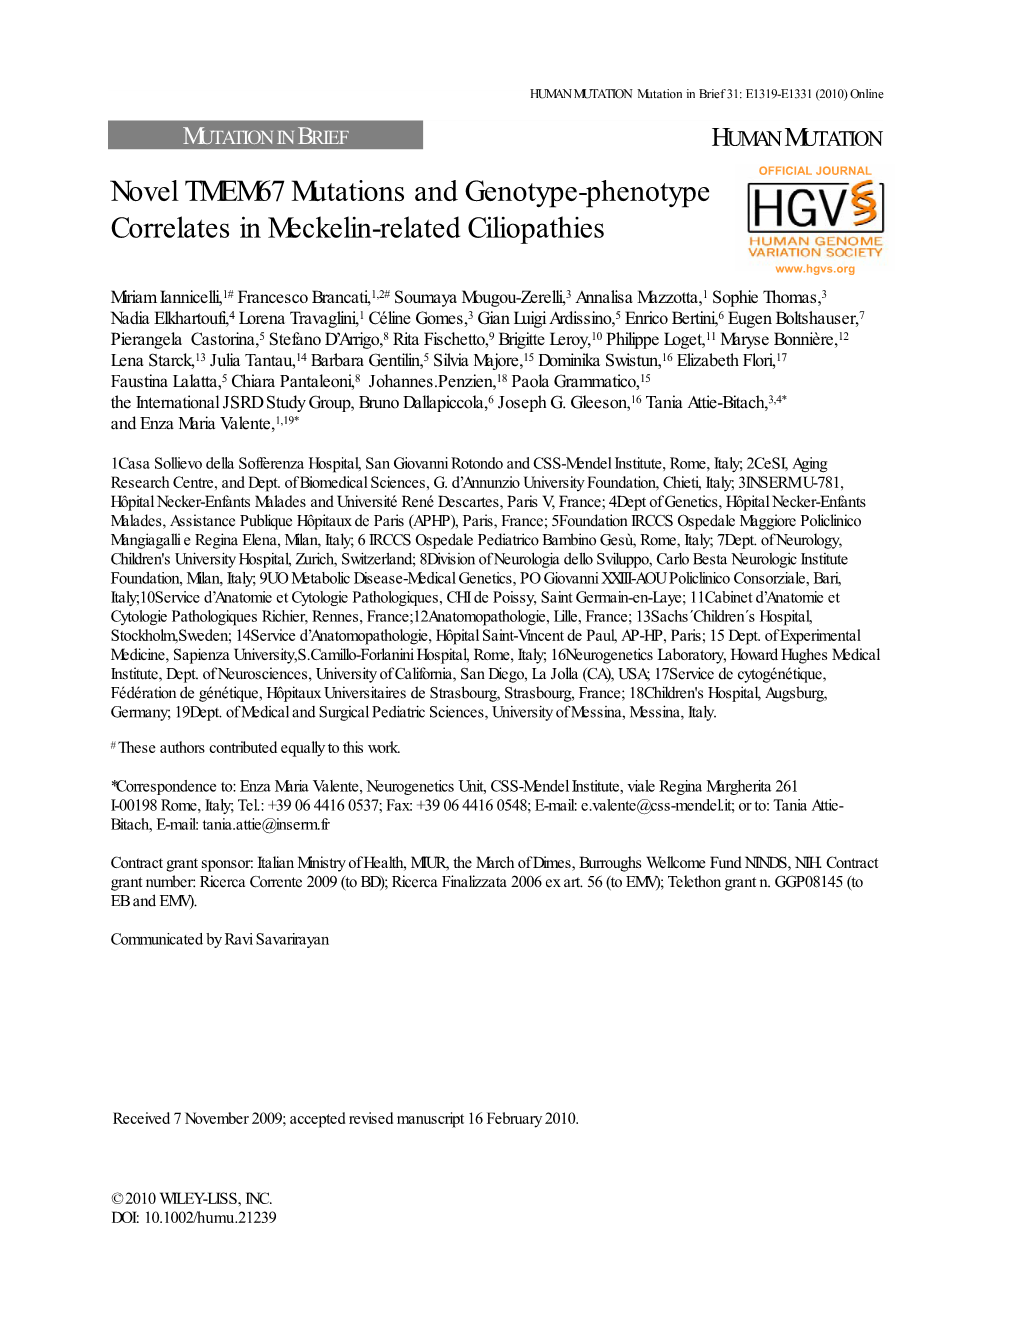 Novel TMEM67 Mutations and Genotype?Phenotype Correlates In